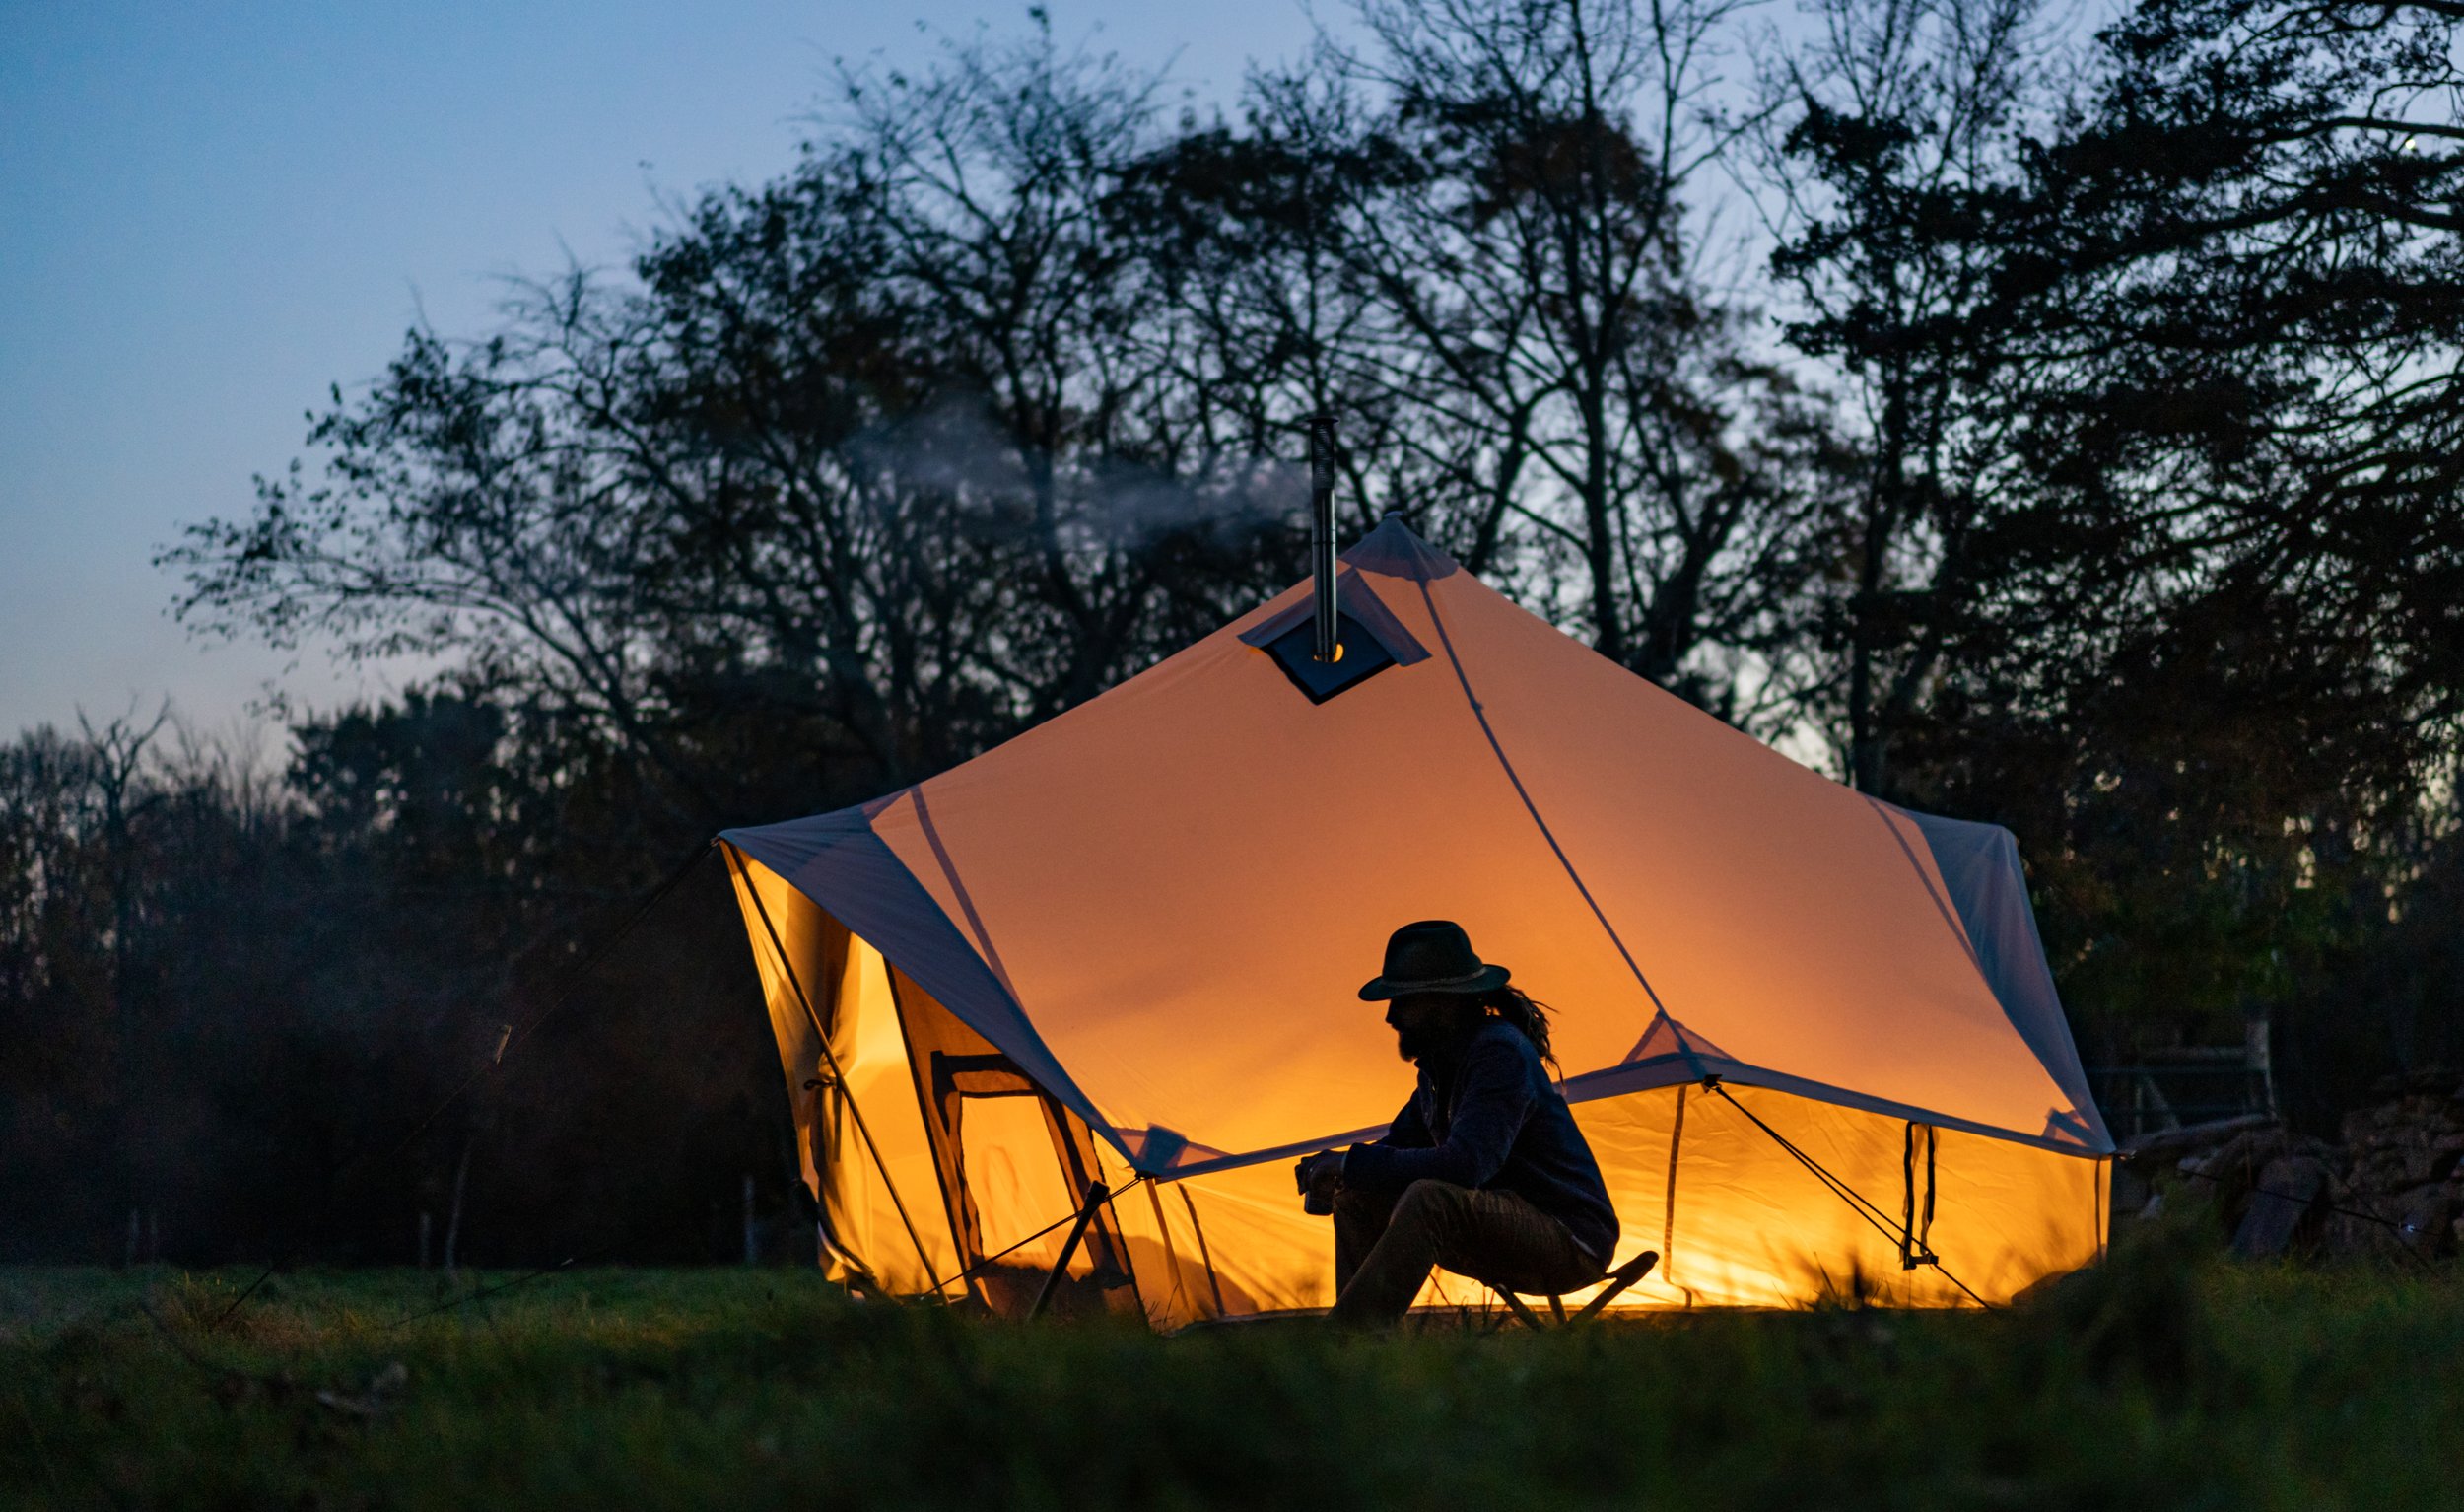 This Solar Tent Has Heated Floors, Wi-Fi, and It Illuminates at Night